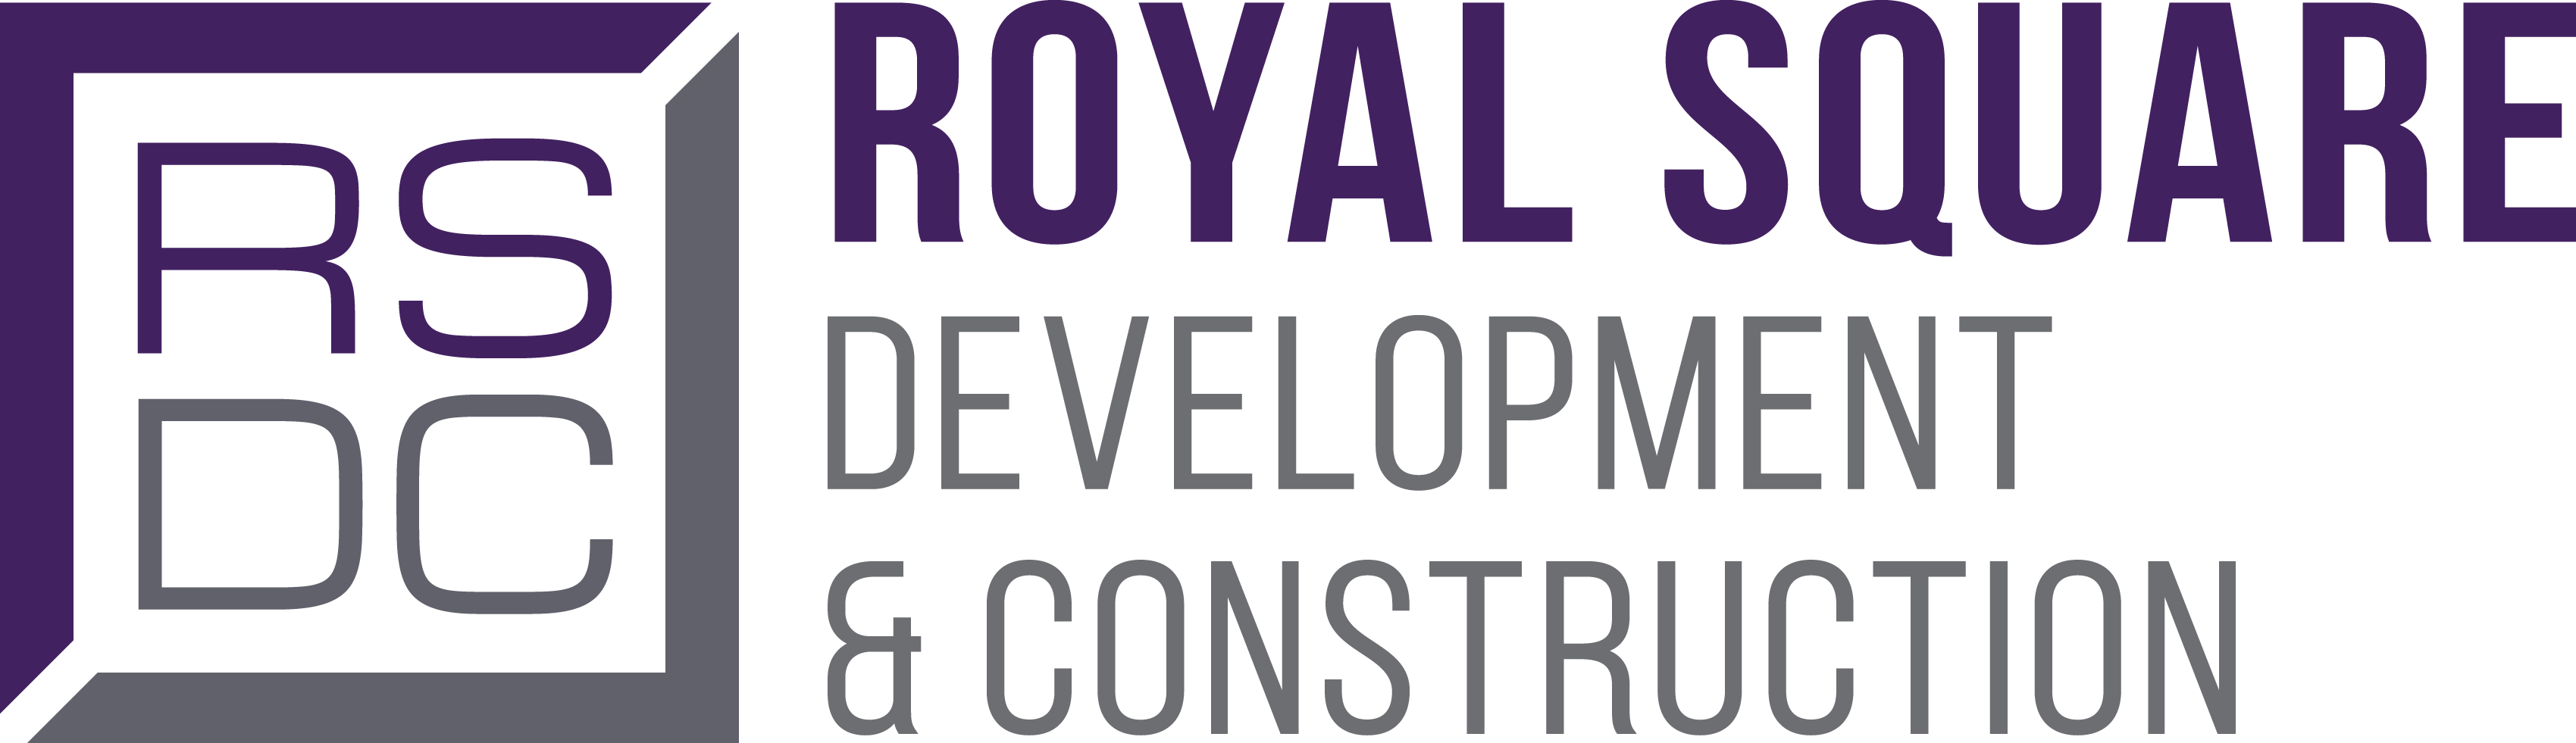 Royal Square Development & Construction logo